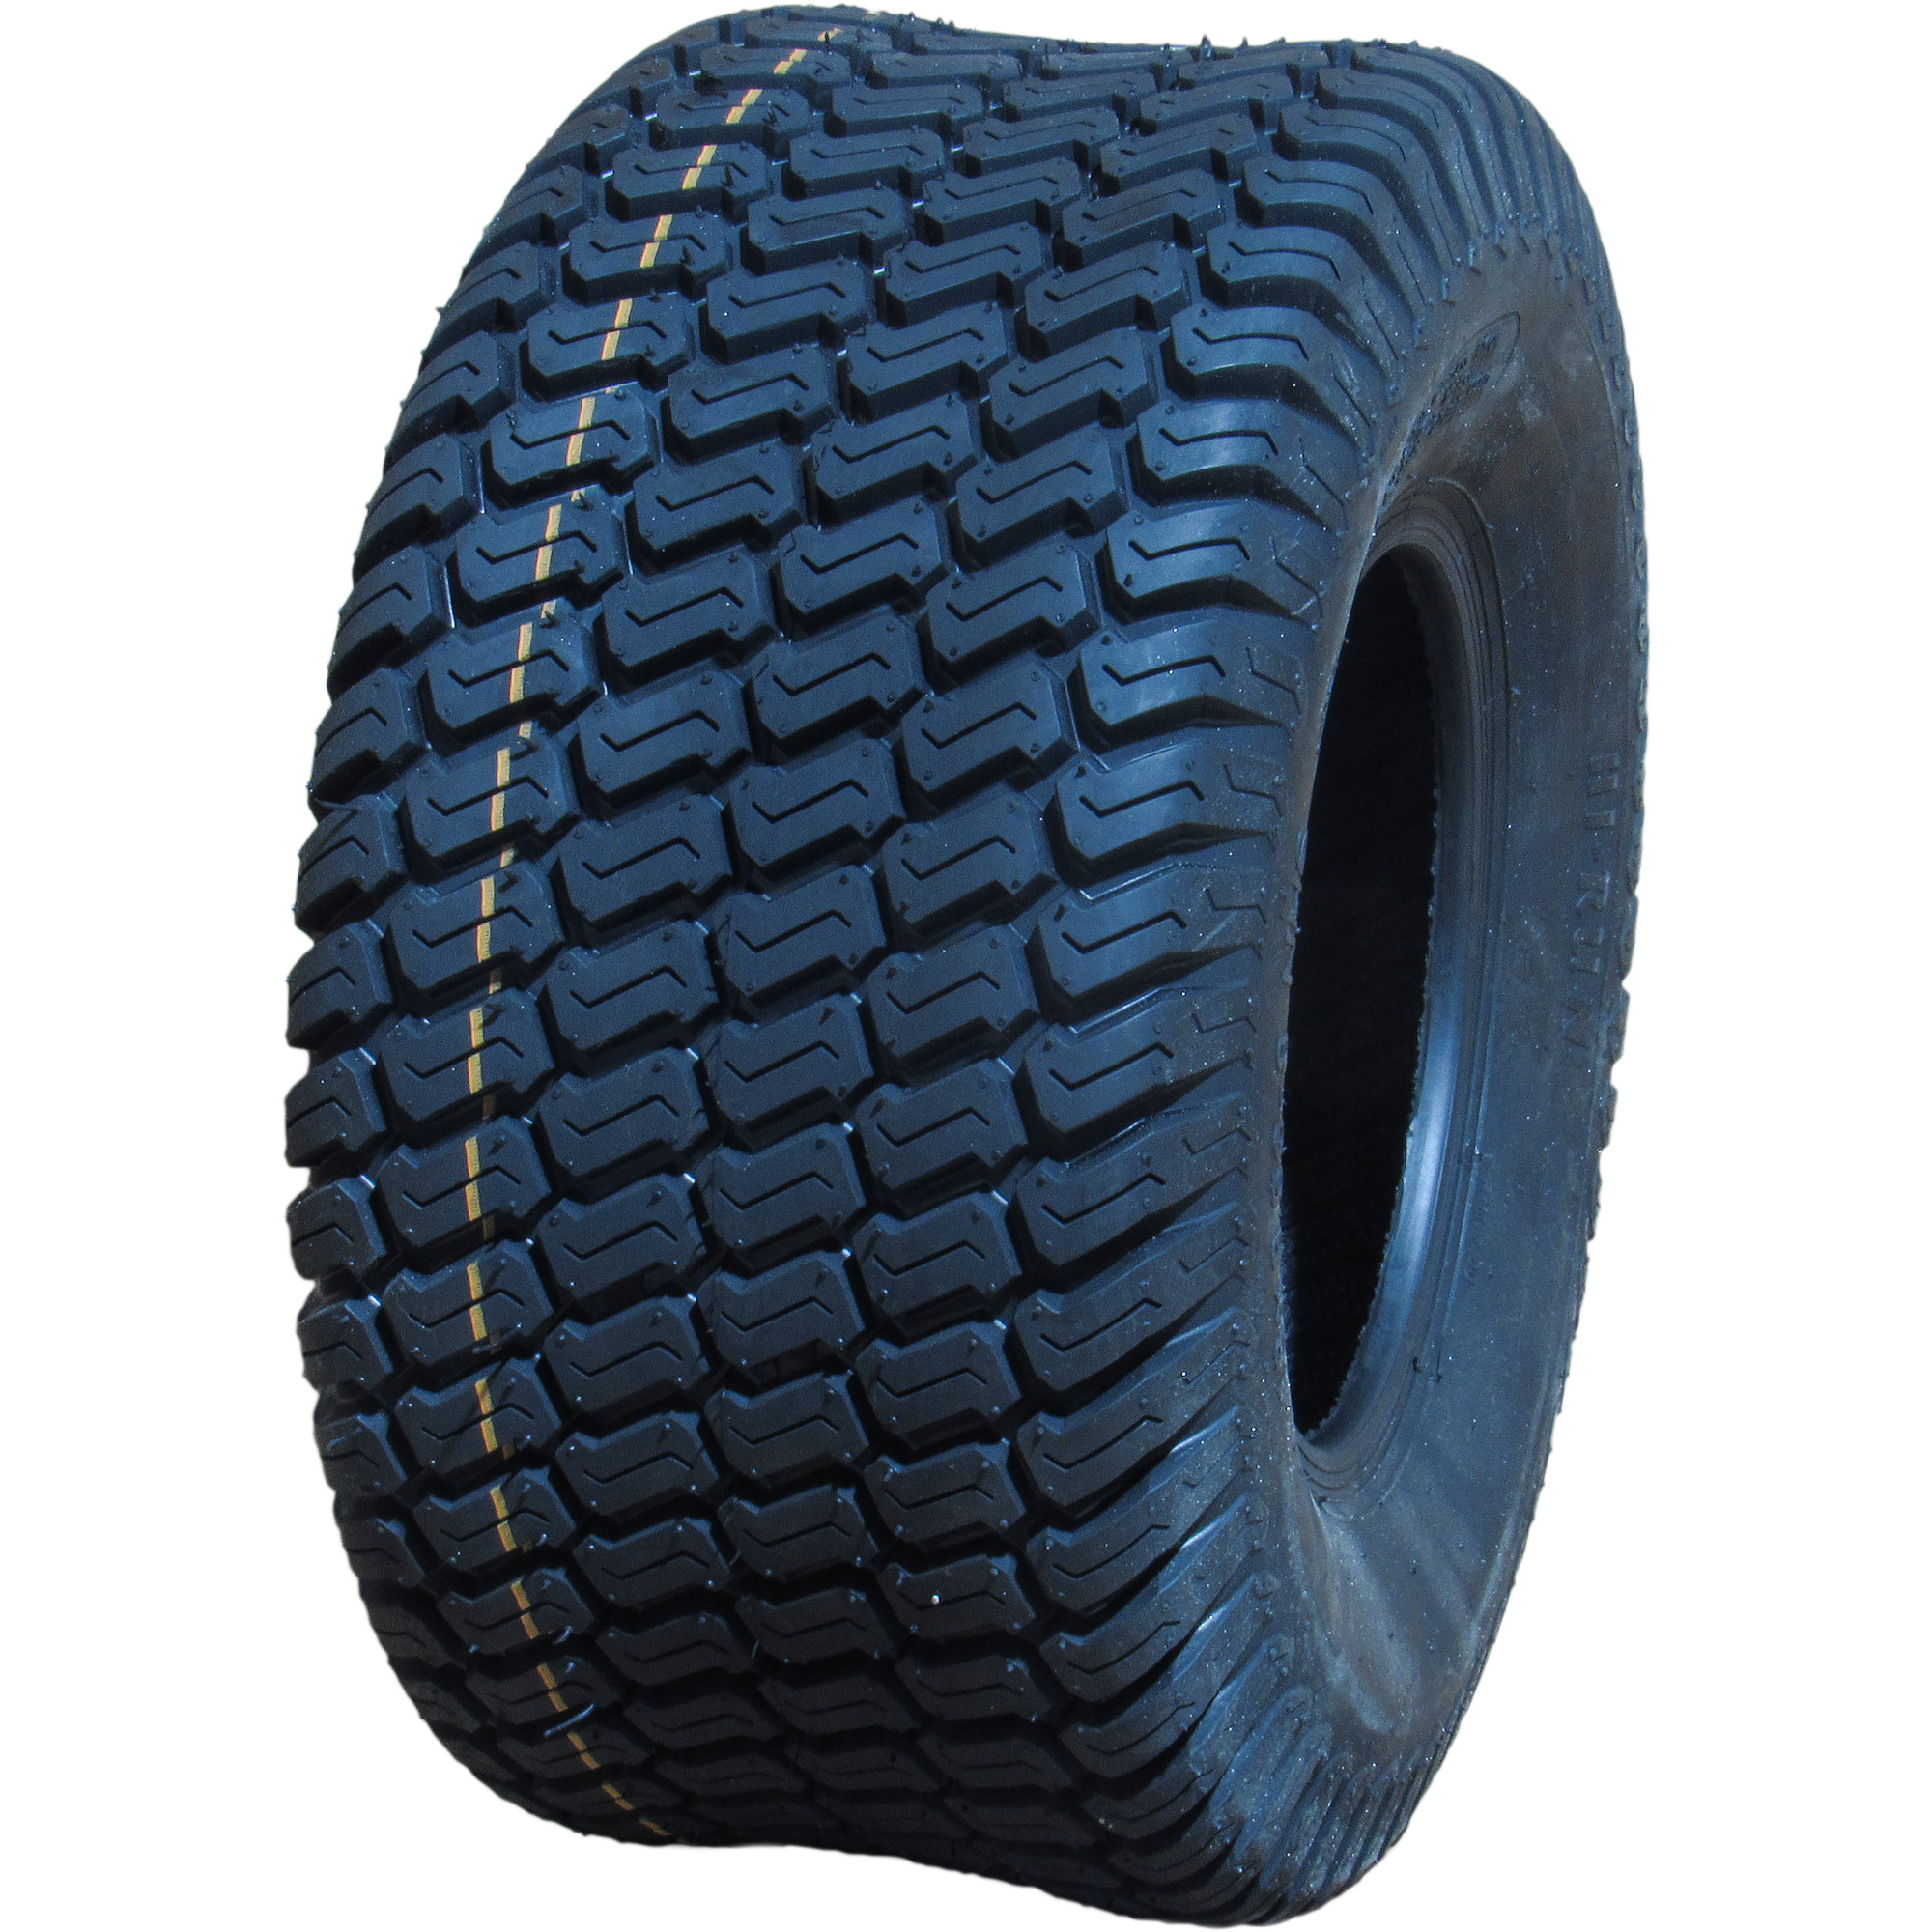 HI-RUN, Lawn Garden Tire, SU05 Turf, Tire Size 18X8.50-8 Load Range Rating A, Model WD1032